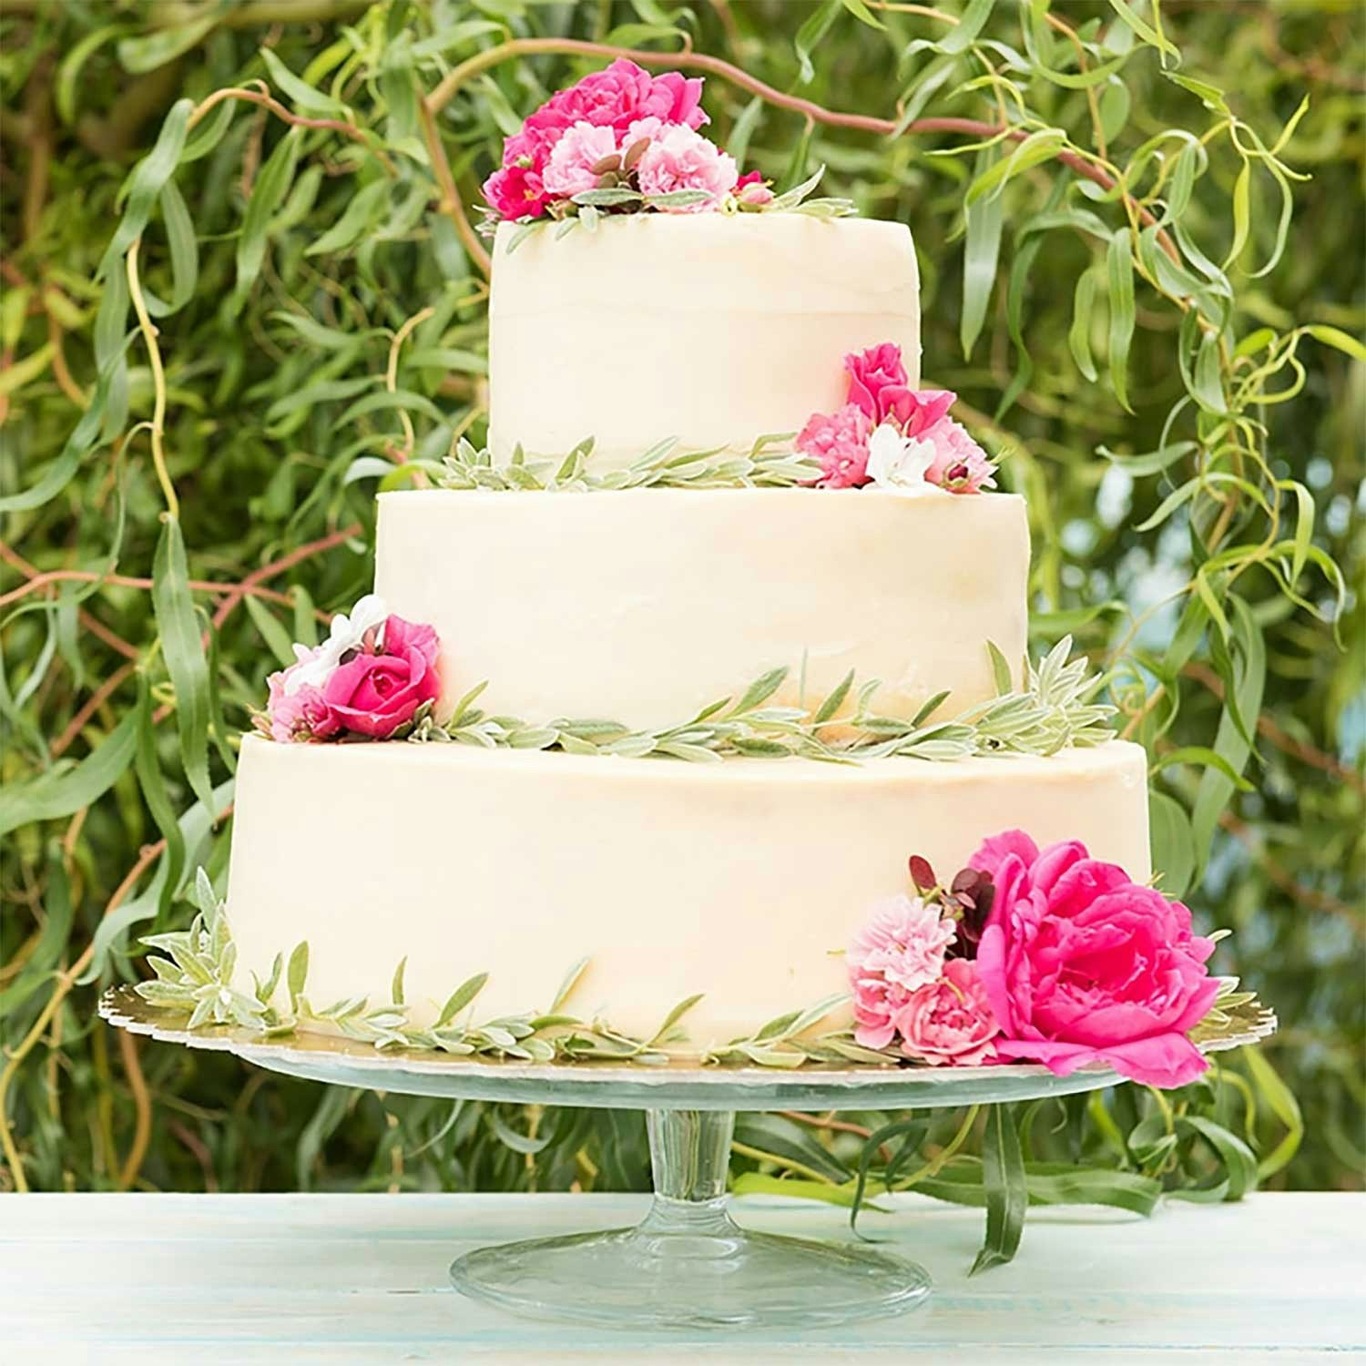 https://royaldesign.com/image/2/nordic-ware-naturals-wedding-cake-set-5-rear-molds-1?w=800&quality=80